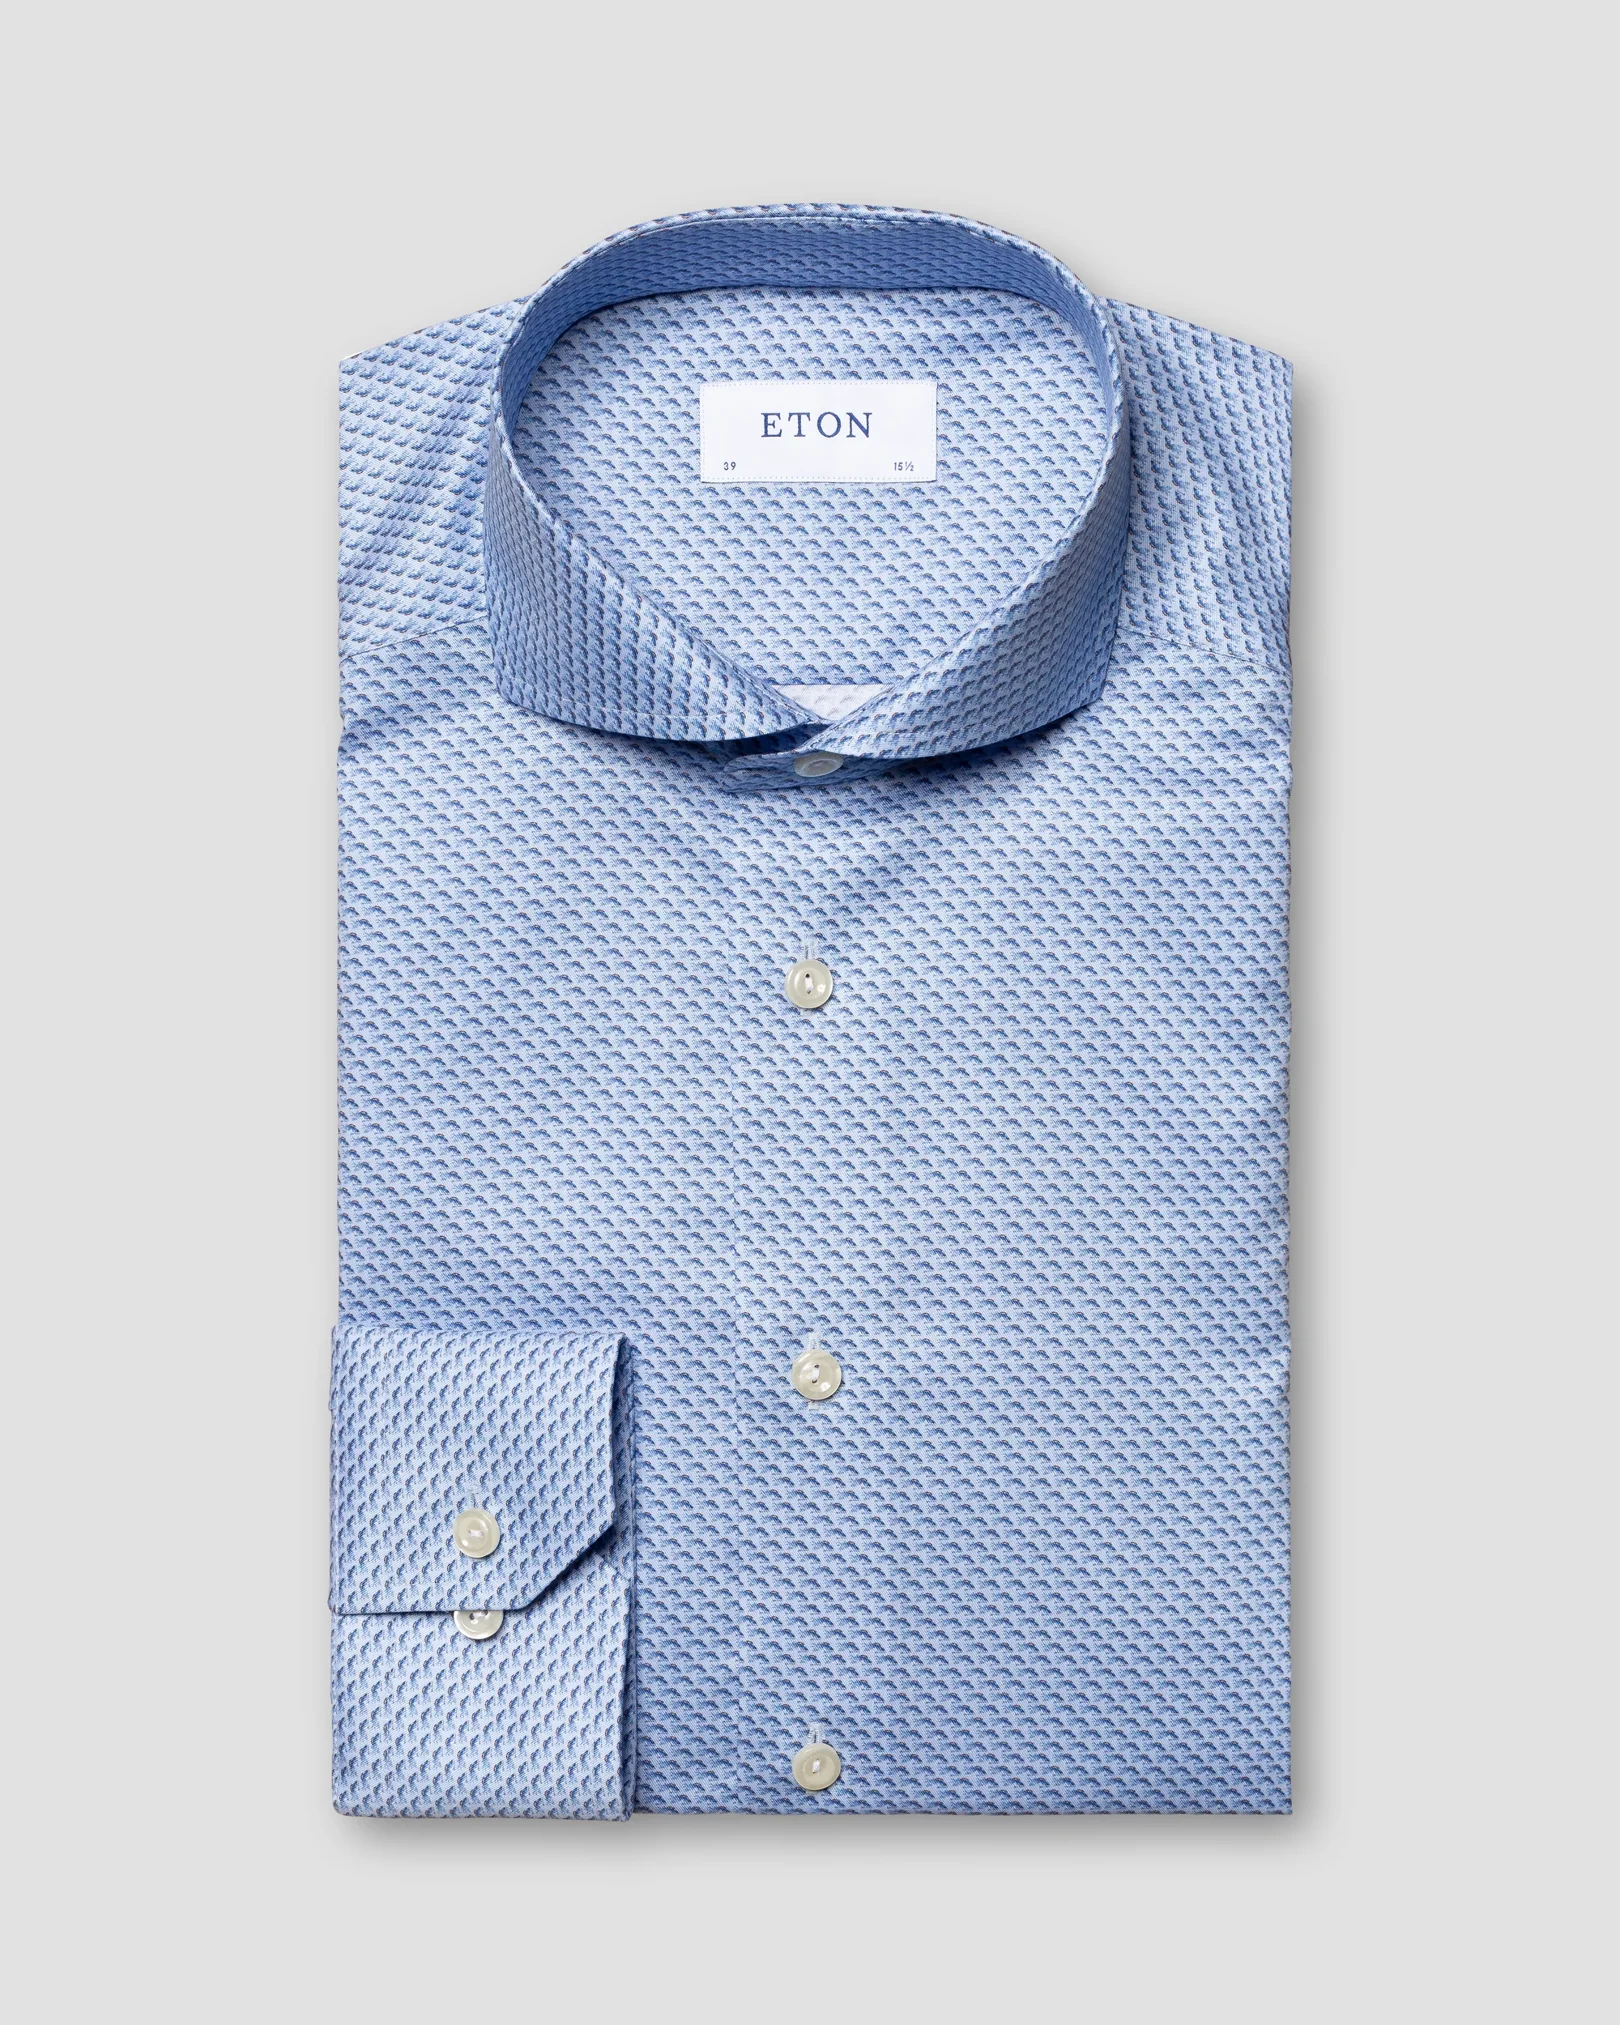 Eton - blue fish print twill shirt extreme cut away